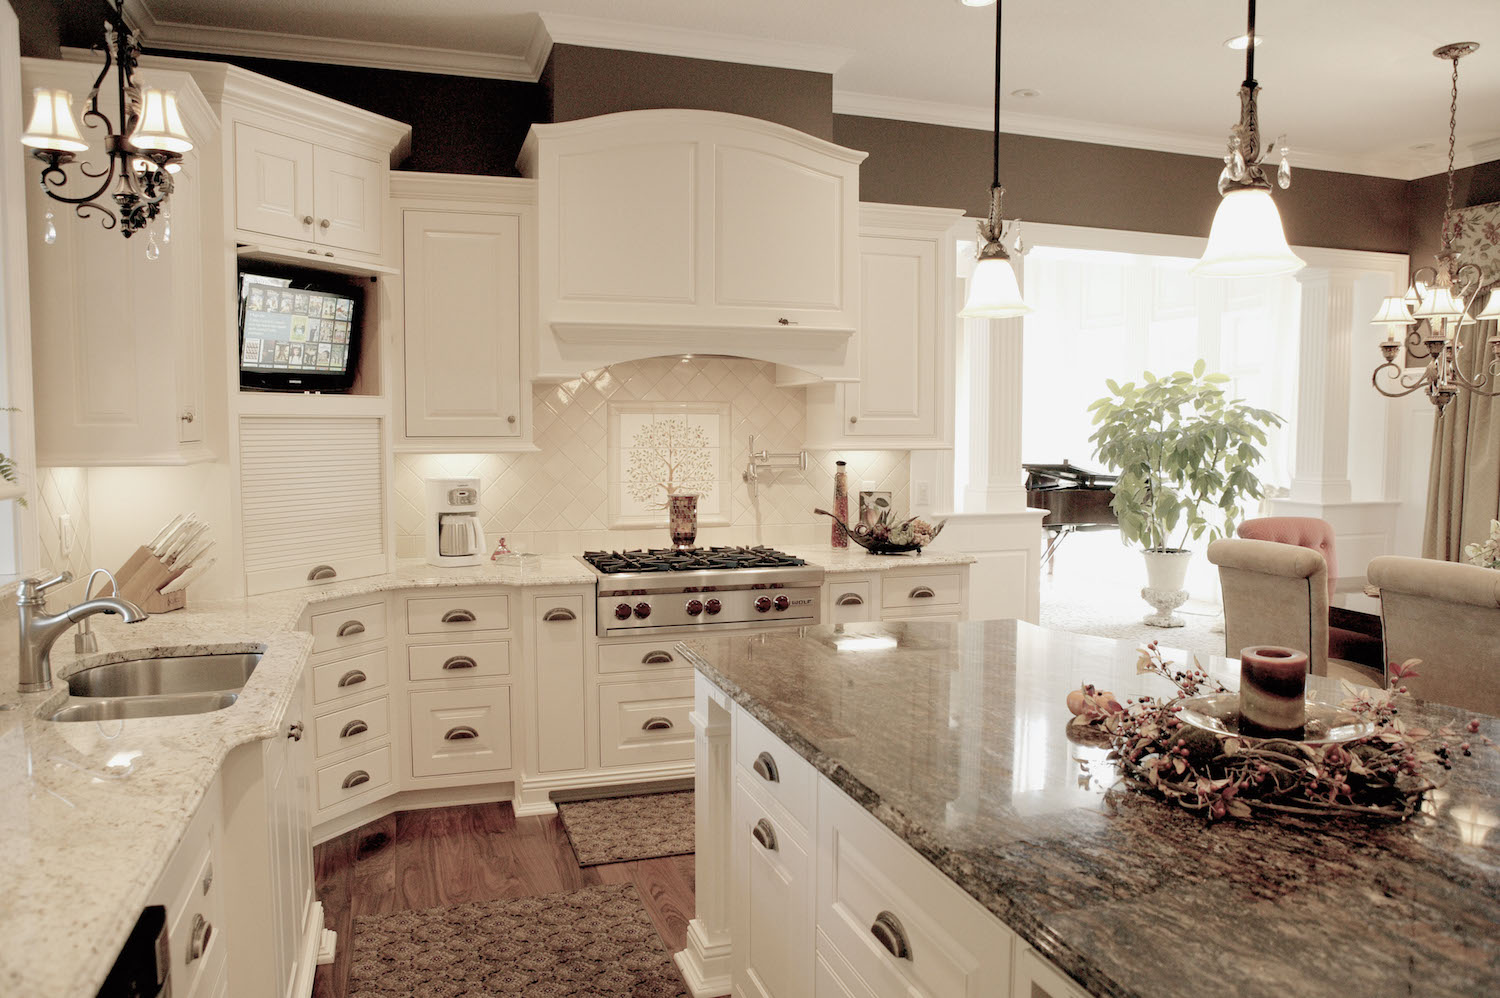 Granite countertops & island in kitchen by C&D Granite